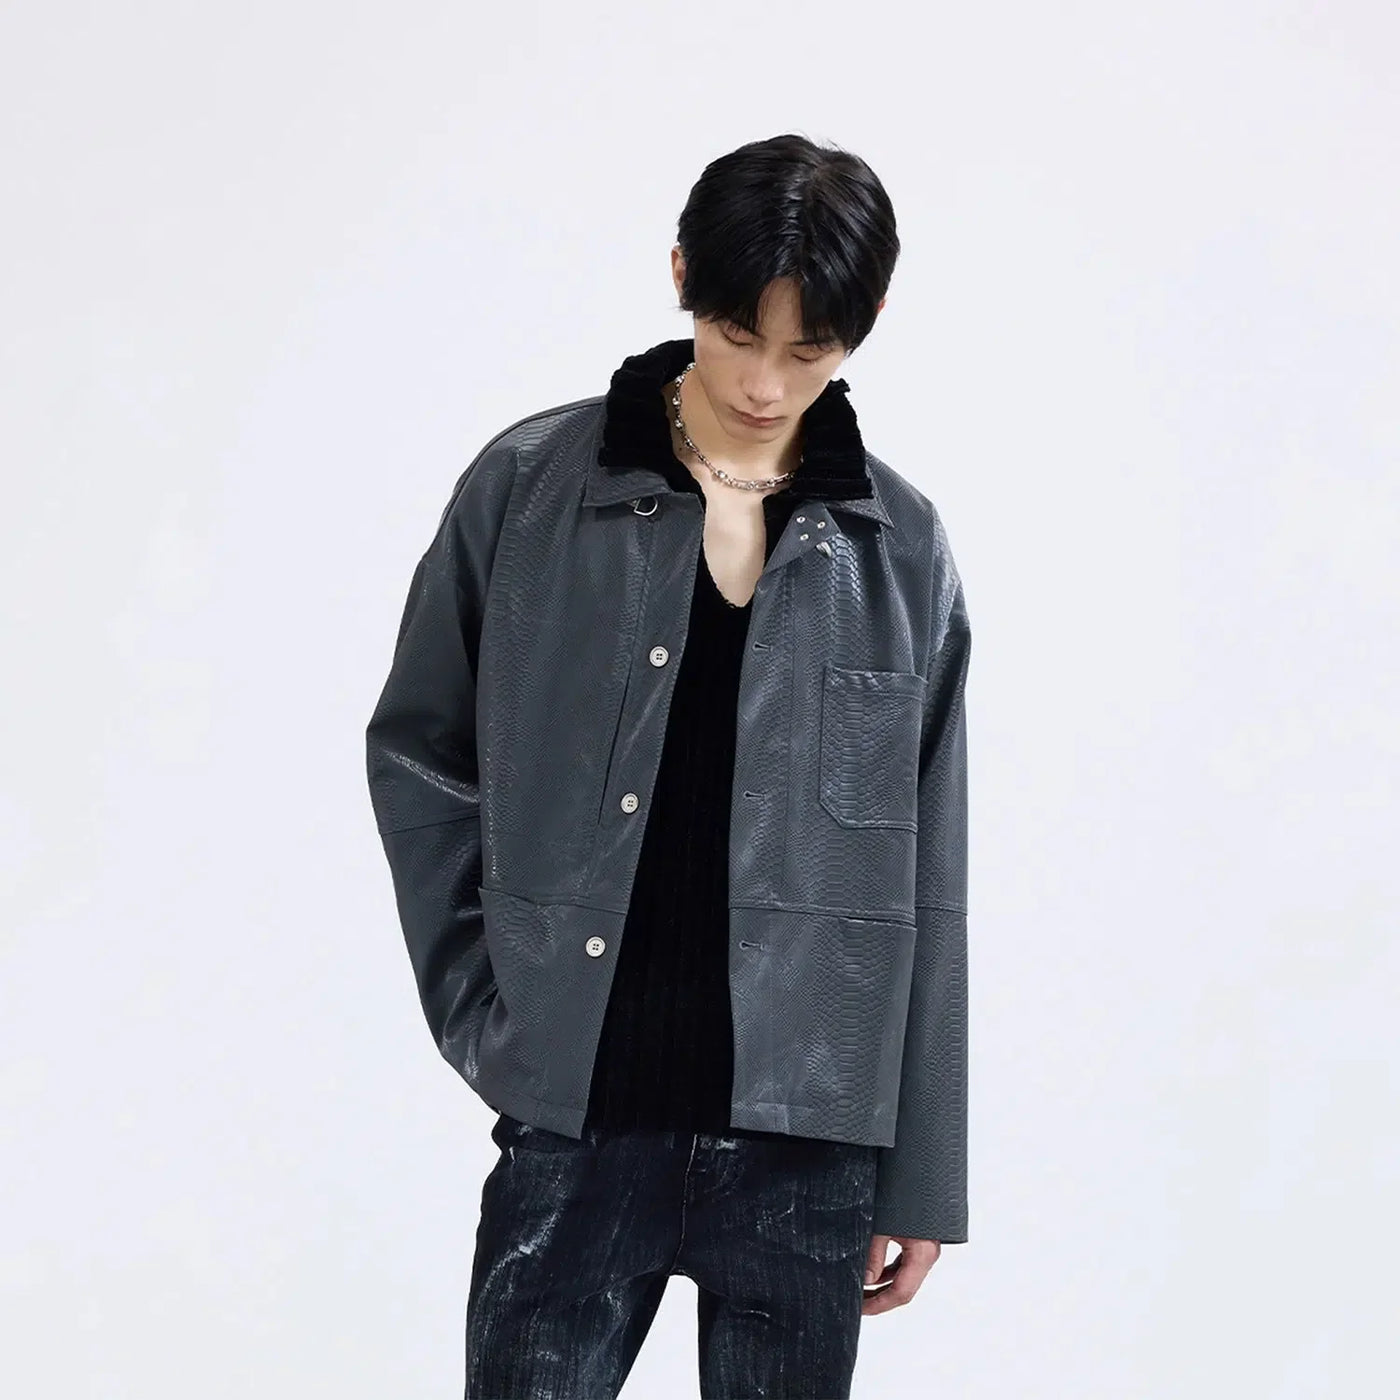 Snake Textured PU Leather Jacket Korean Street Fashion Jacket By Terra Incognita Shop Online at OH Vault